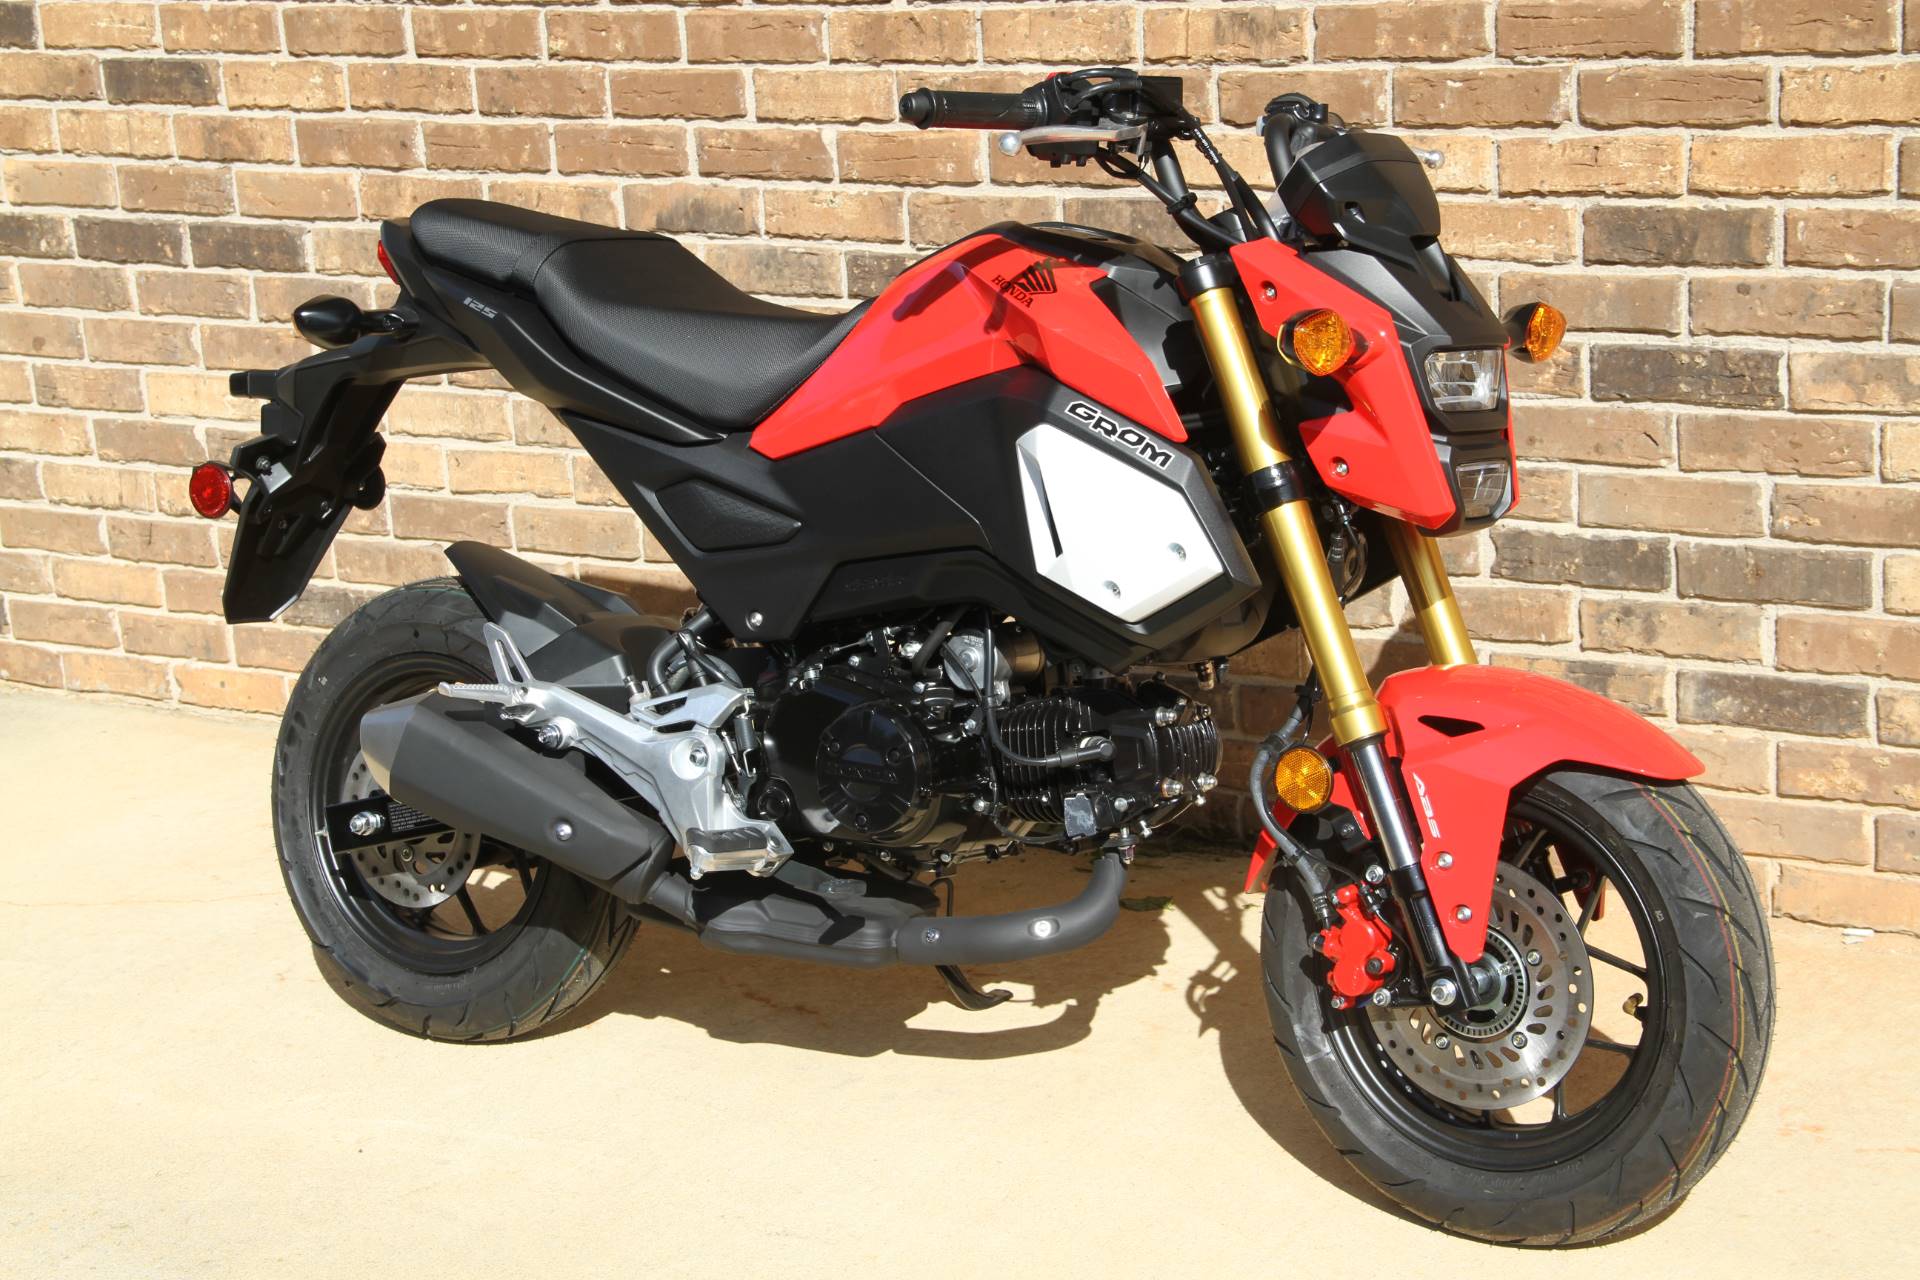 New 2020 Honda Grom ABS Motorcycles in Hendersonville, NC Stock